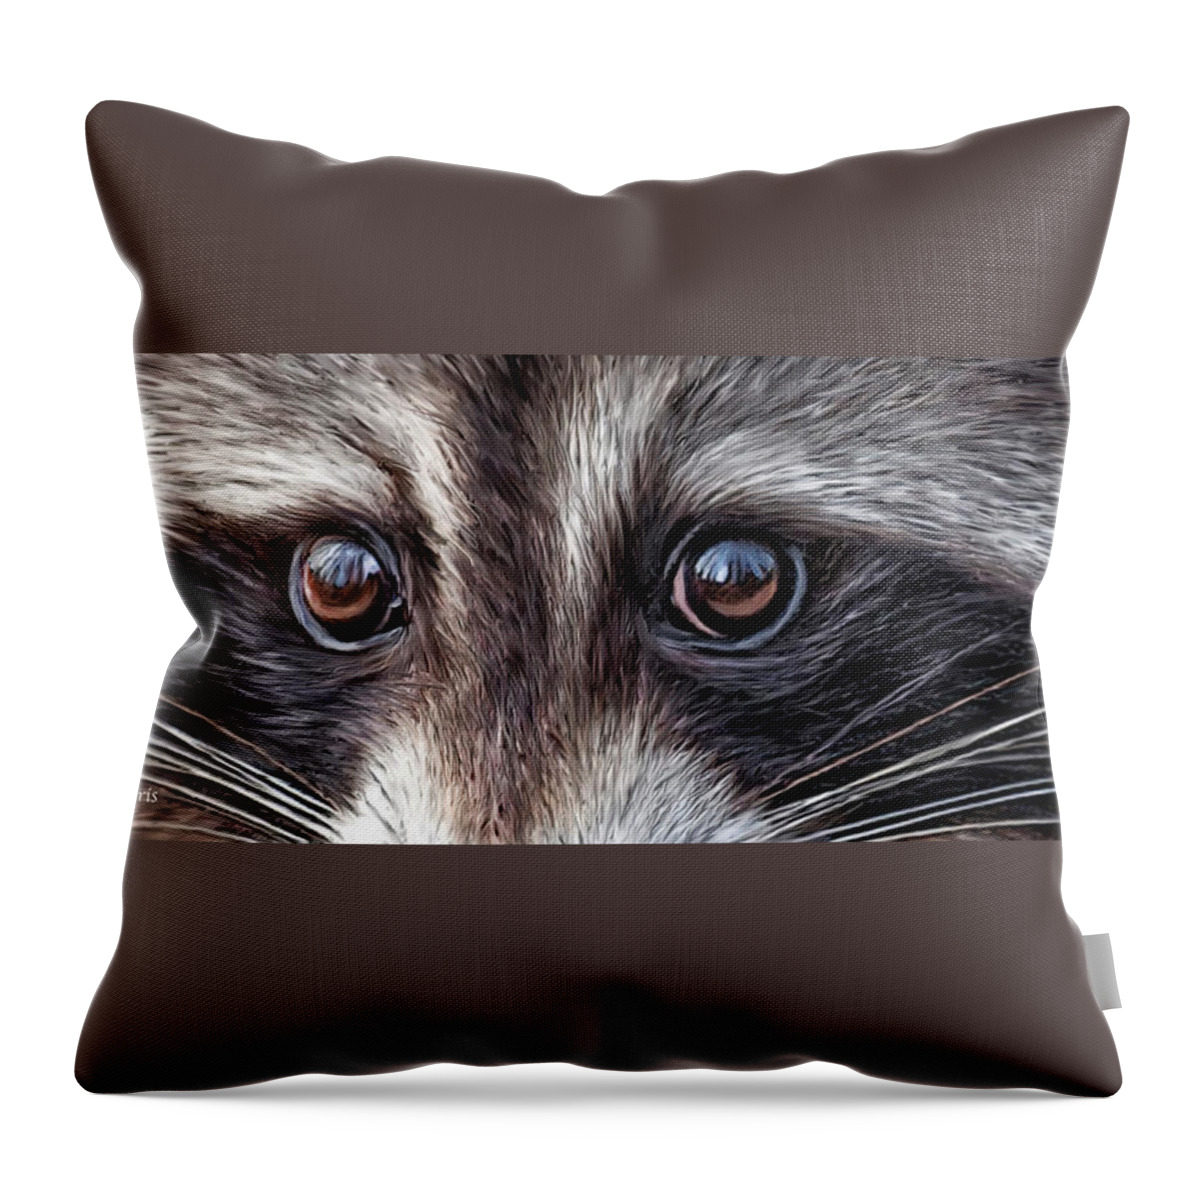 Raccoon Throw Pillow featuring the mixed media Wild Eyes - Raccoon by Carol Cavalaris